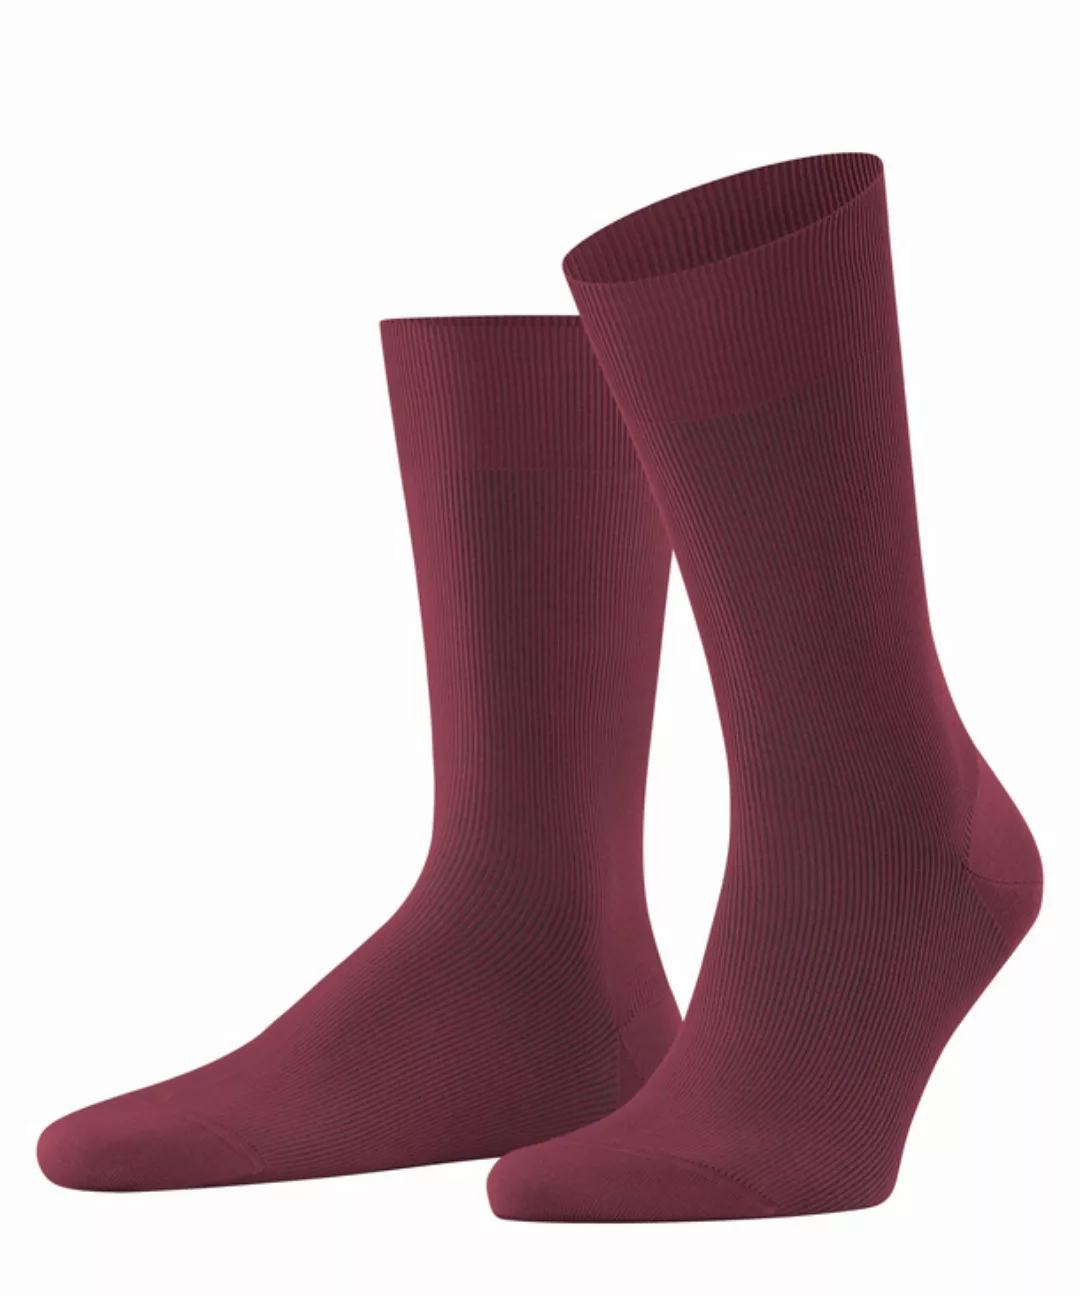 FALKE Fine Shadow Herren Socken, 43-44, Rot, Rippe, Baumwolle, 13141-841305 günstig online kaufen